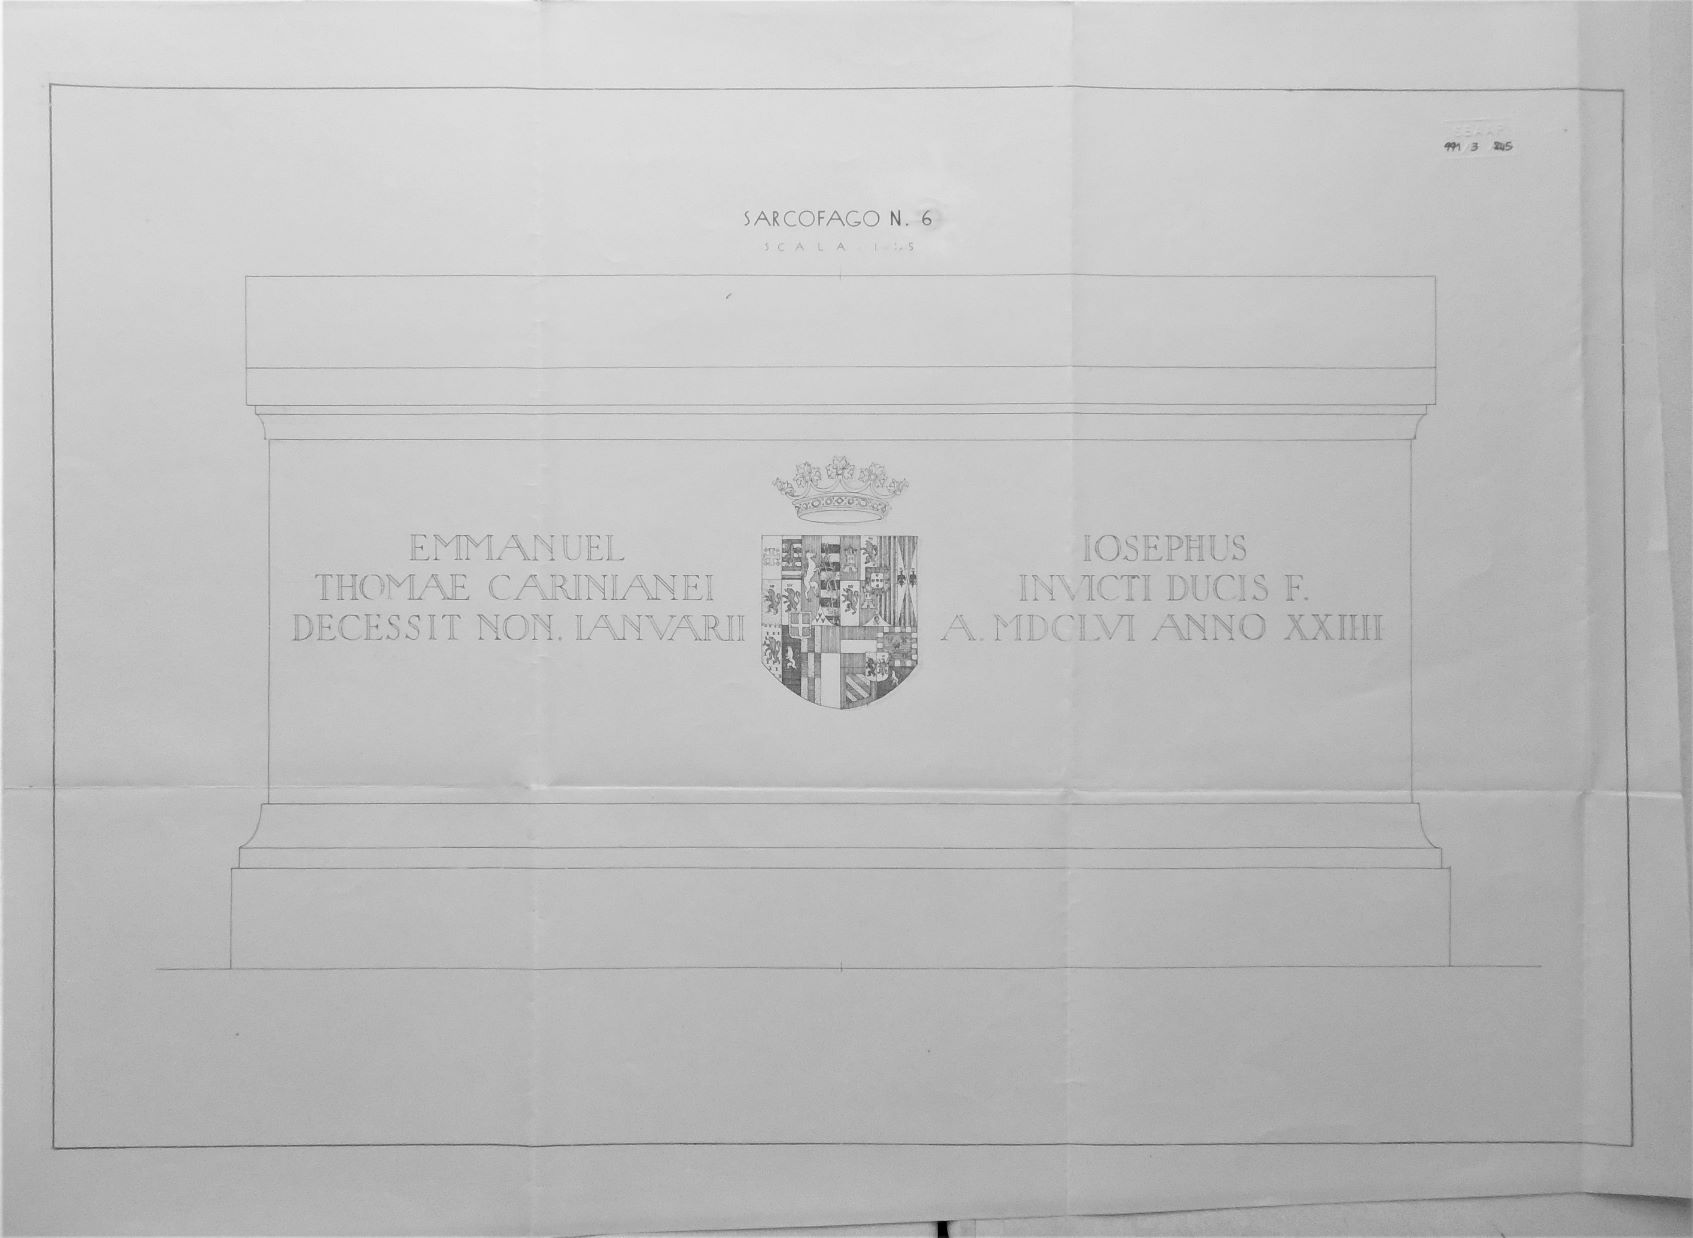 Sacra di San Michele/ Sarcofago n. 6 - scala 1:5, Sacra di San Michele a Sant'Ambrogio di Susa (TO) - Sarcofago n. 6 - scala 1:5 (disegno) di Chierici Umberto (cerchia) (secondo quarto sec. XX)